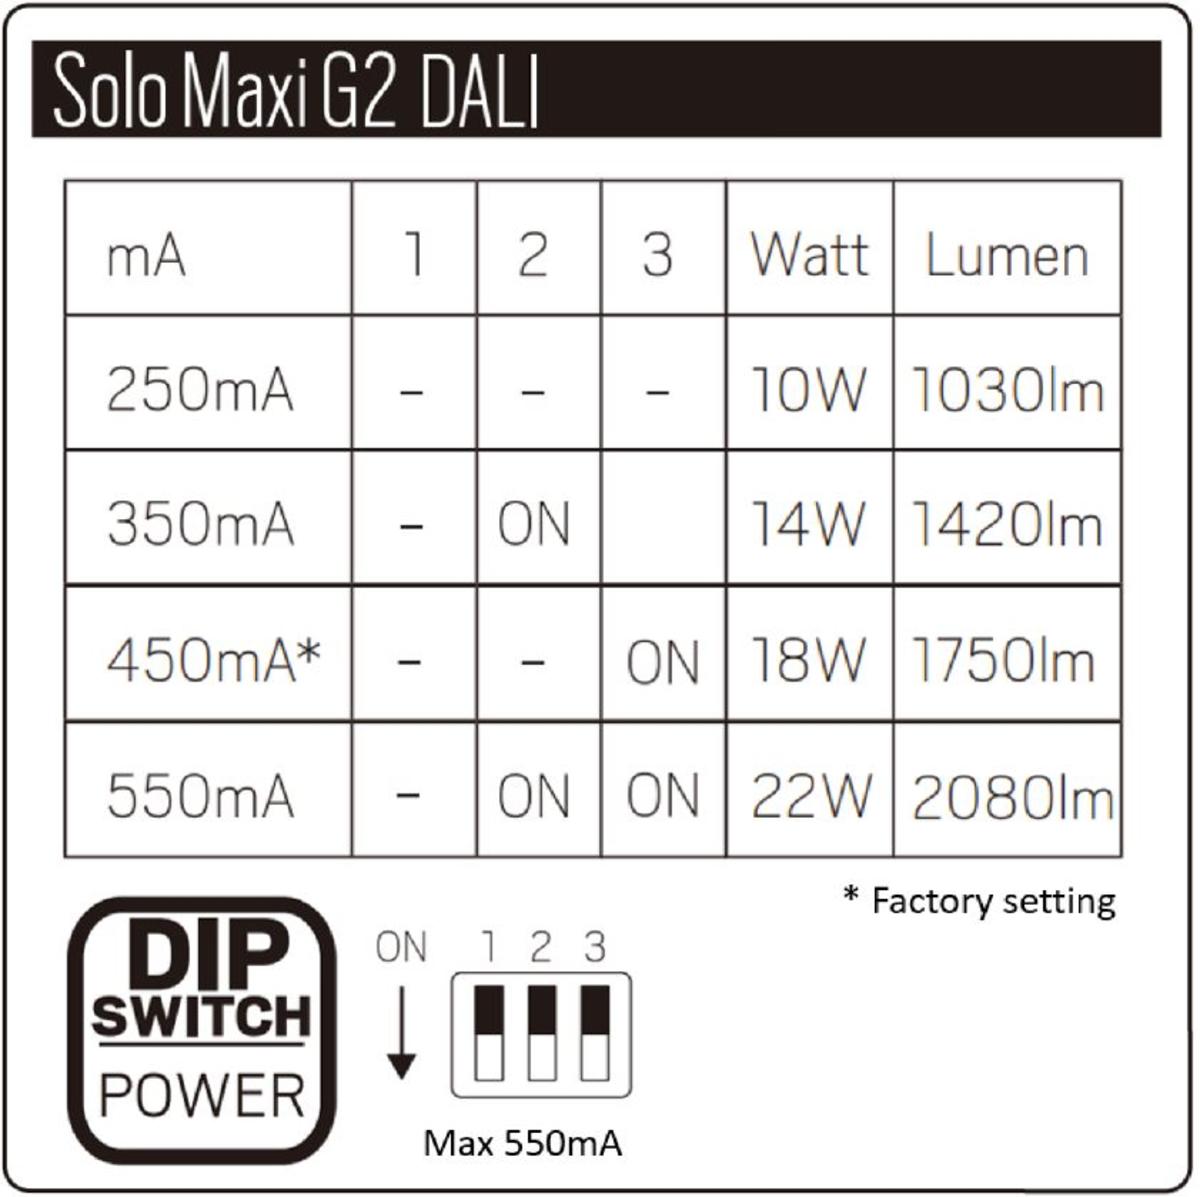 Solo Maxi G2 DALI_DIPpower.JPG